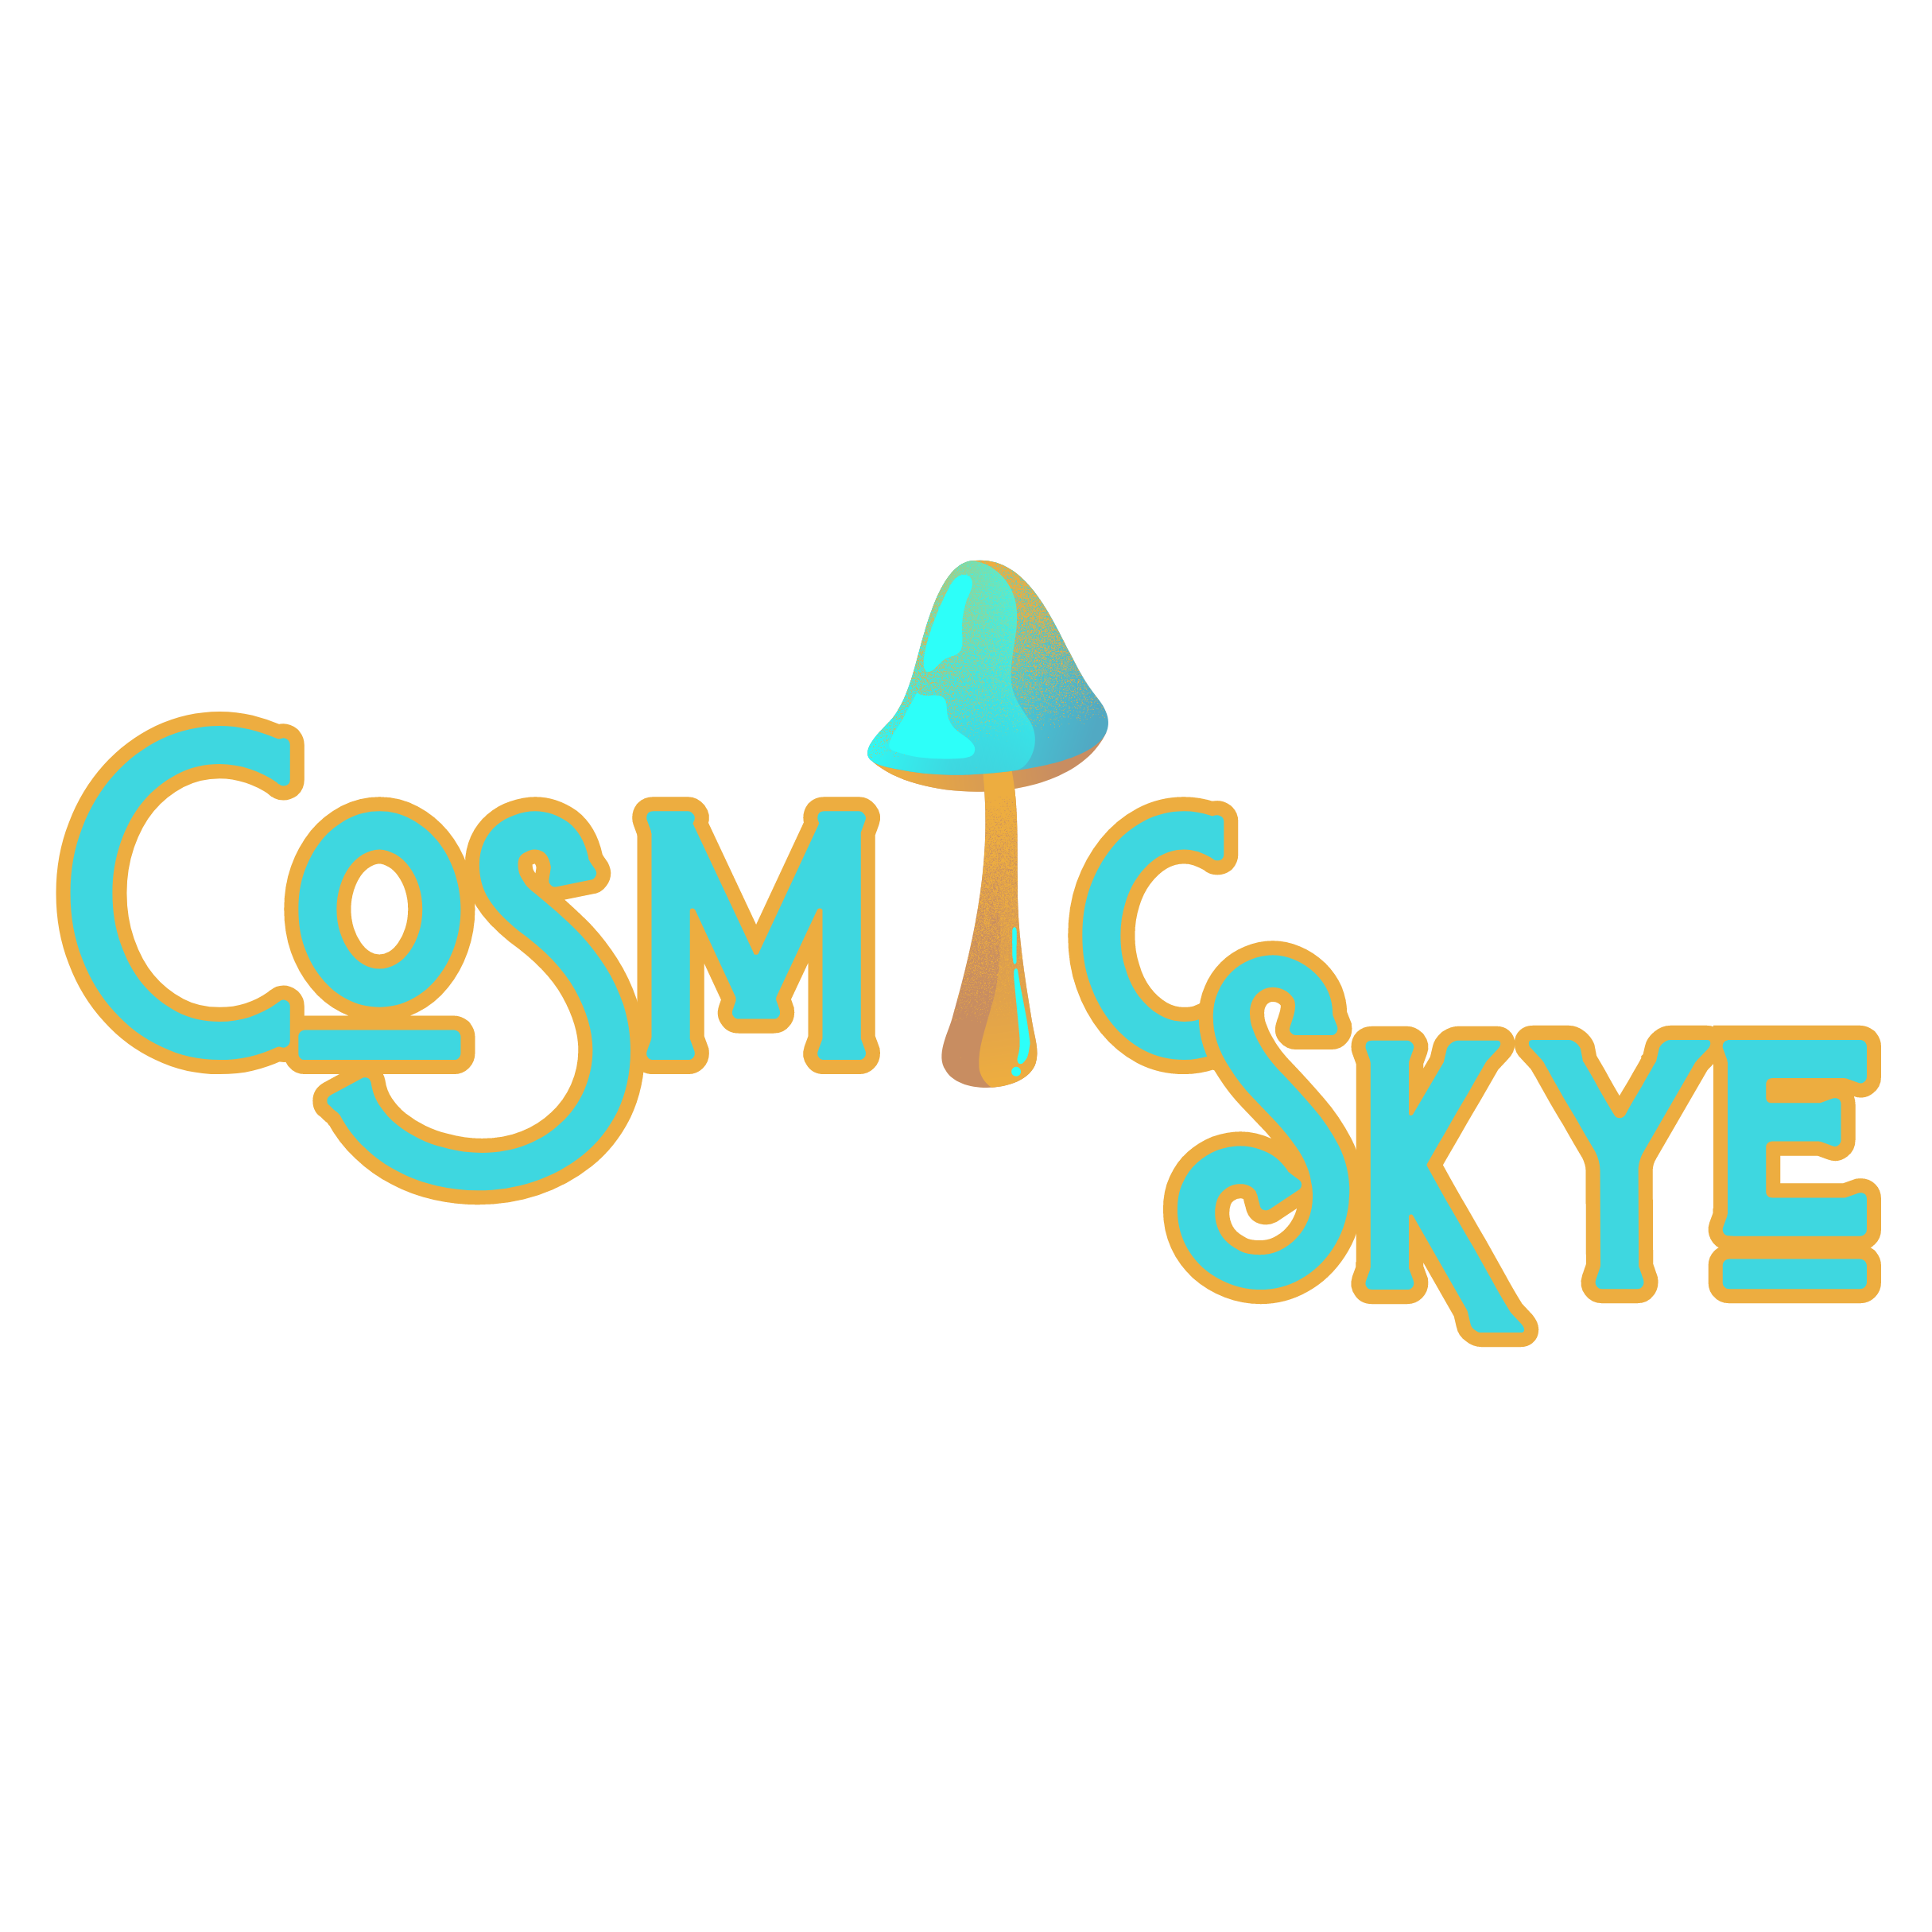 Cosmic Skye